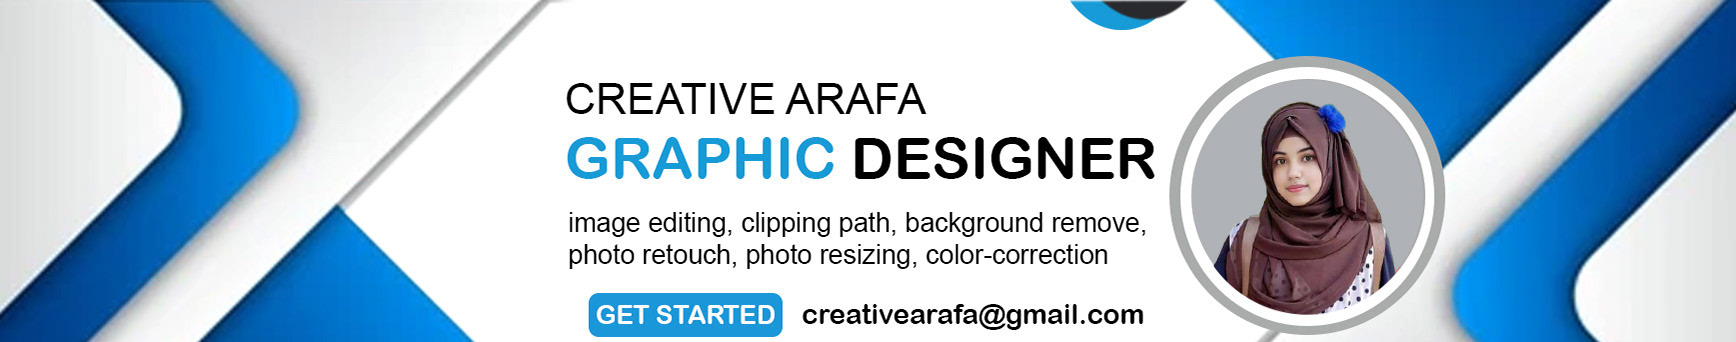 Banner de perfil de creative arafa